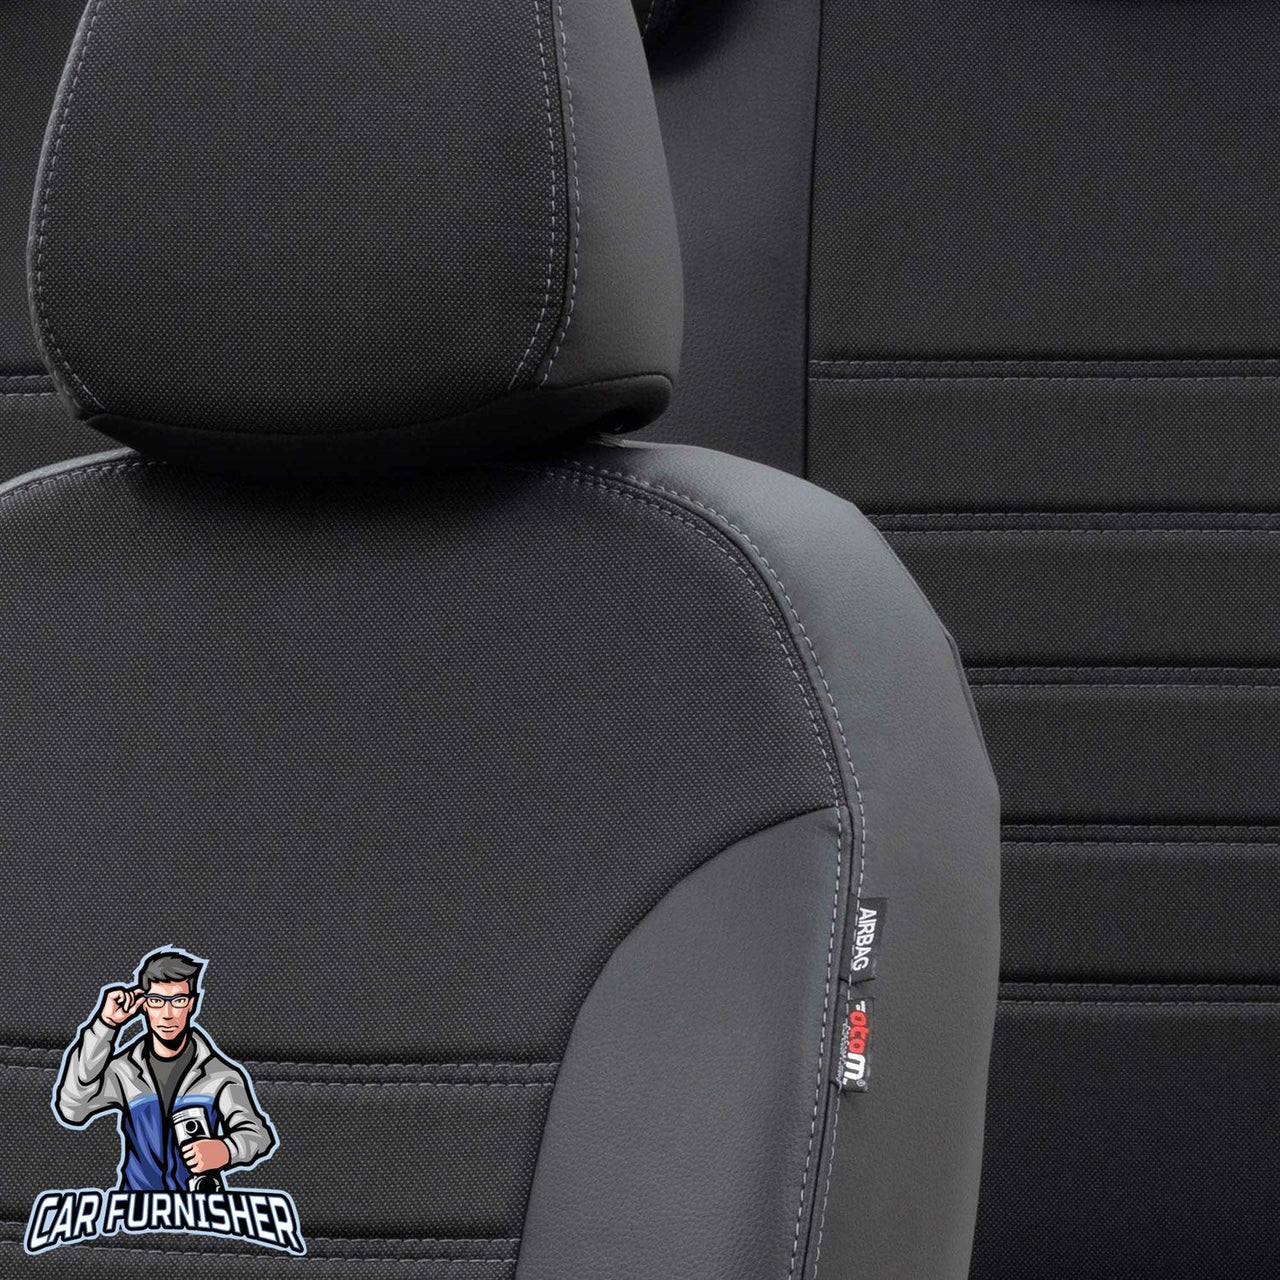 Jeep Grand Cherokee Seat Cover Paris Leather & Jacquard Design Black Leather & Jacquard Fabric